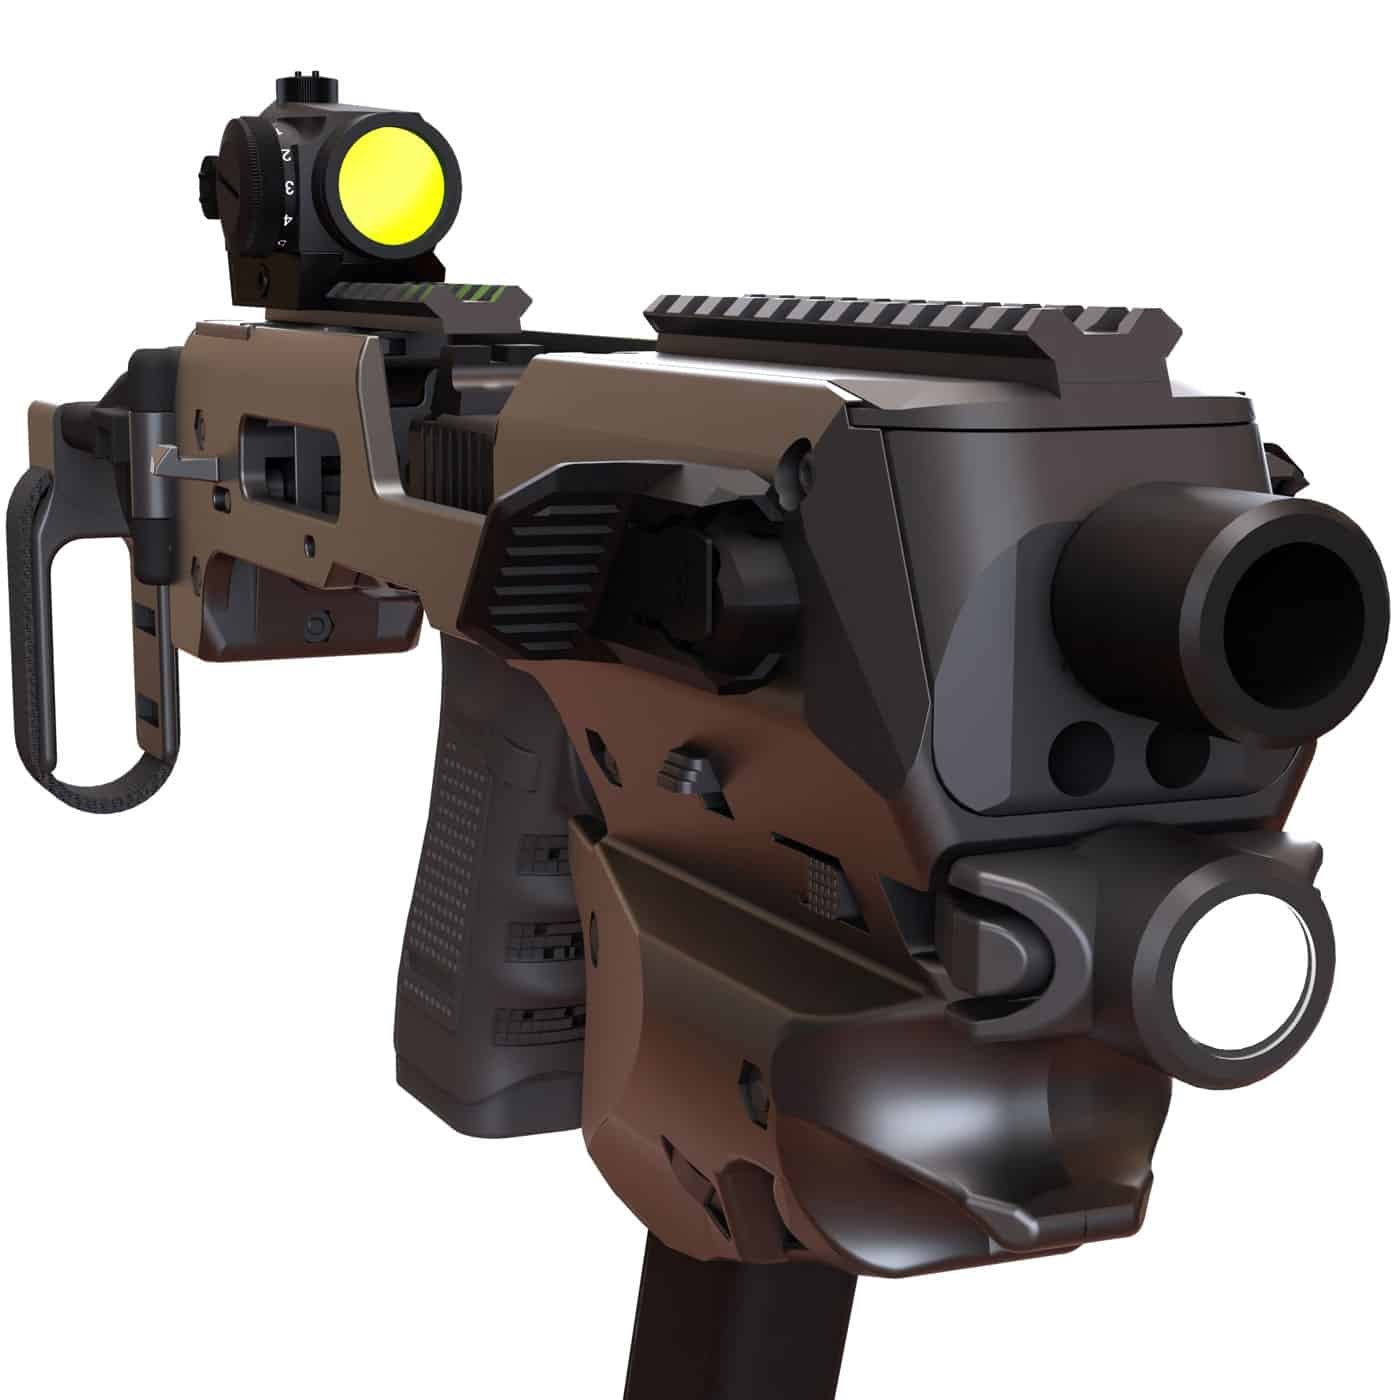 Apex Carbine Conversion Kit for Glock 17 Gen 3-4